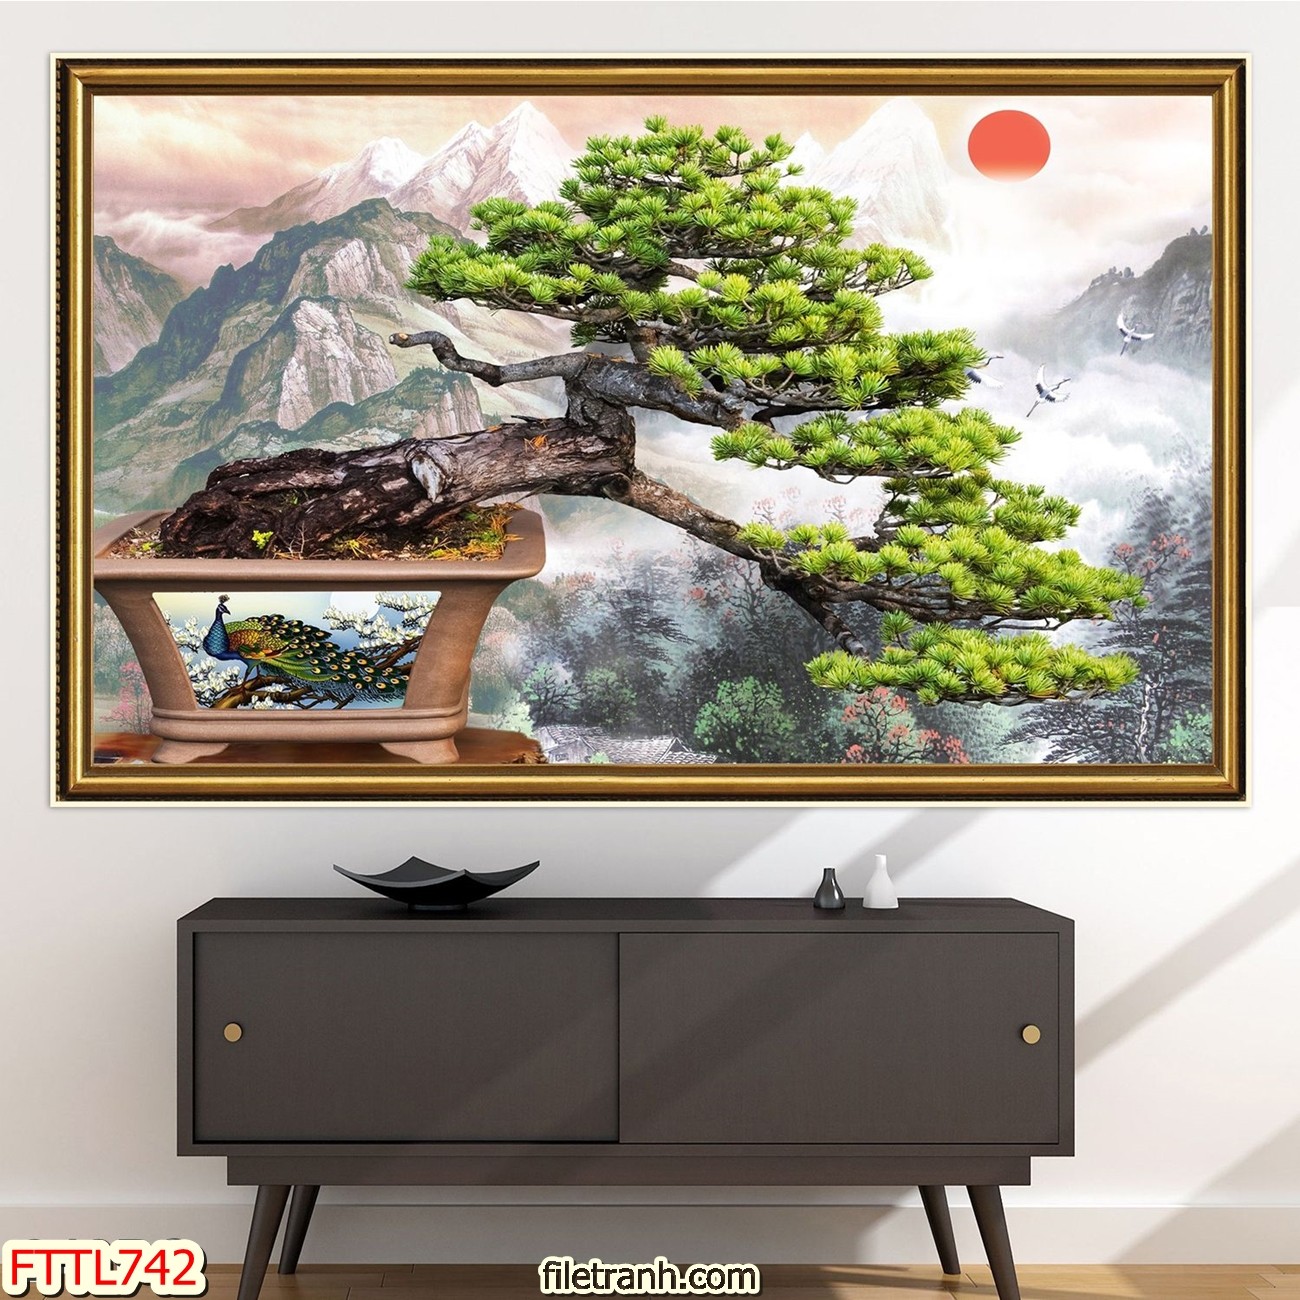 https://filetranh.com/file-tranh-chau-mai-bonsai/file-tranh-chau-mai-bonsai-fttl742.html